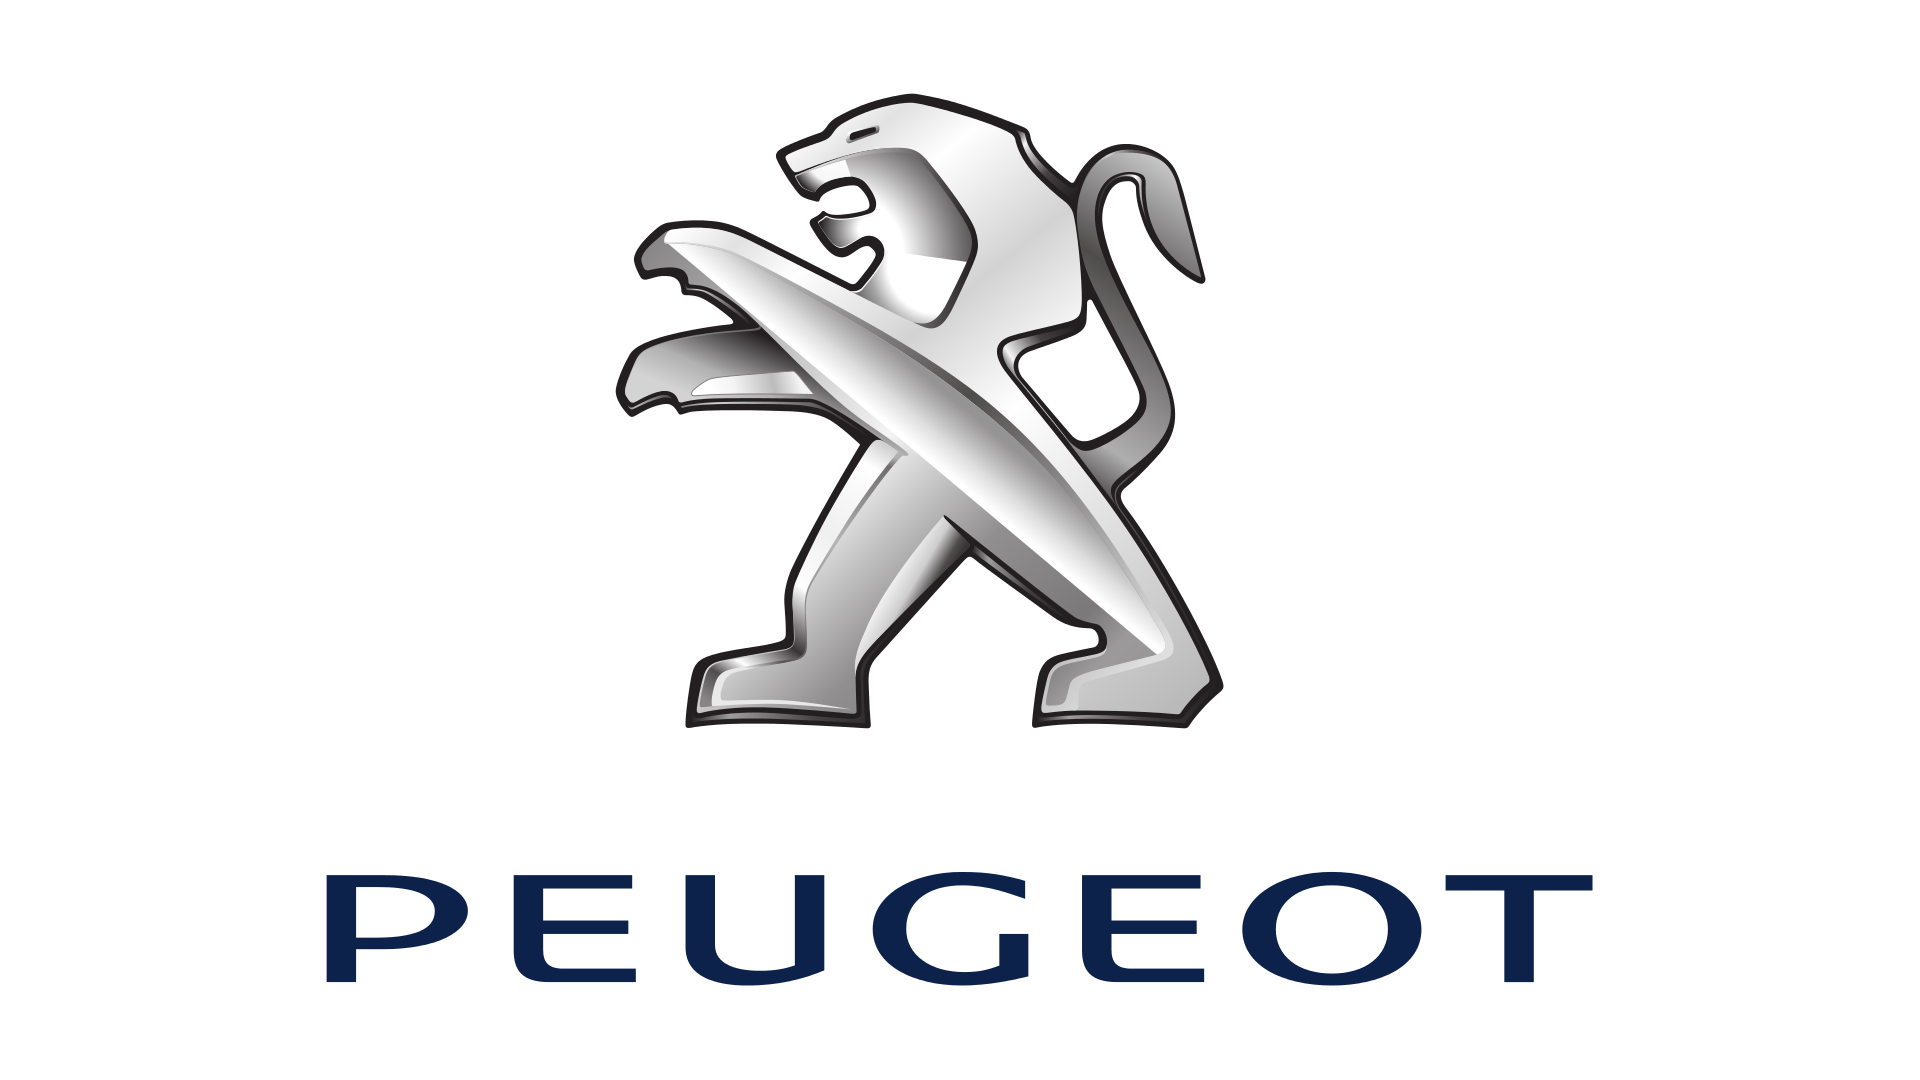 Peugeot logo Free vector 101.